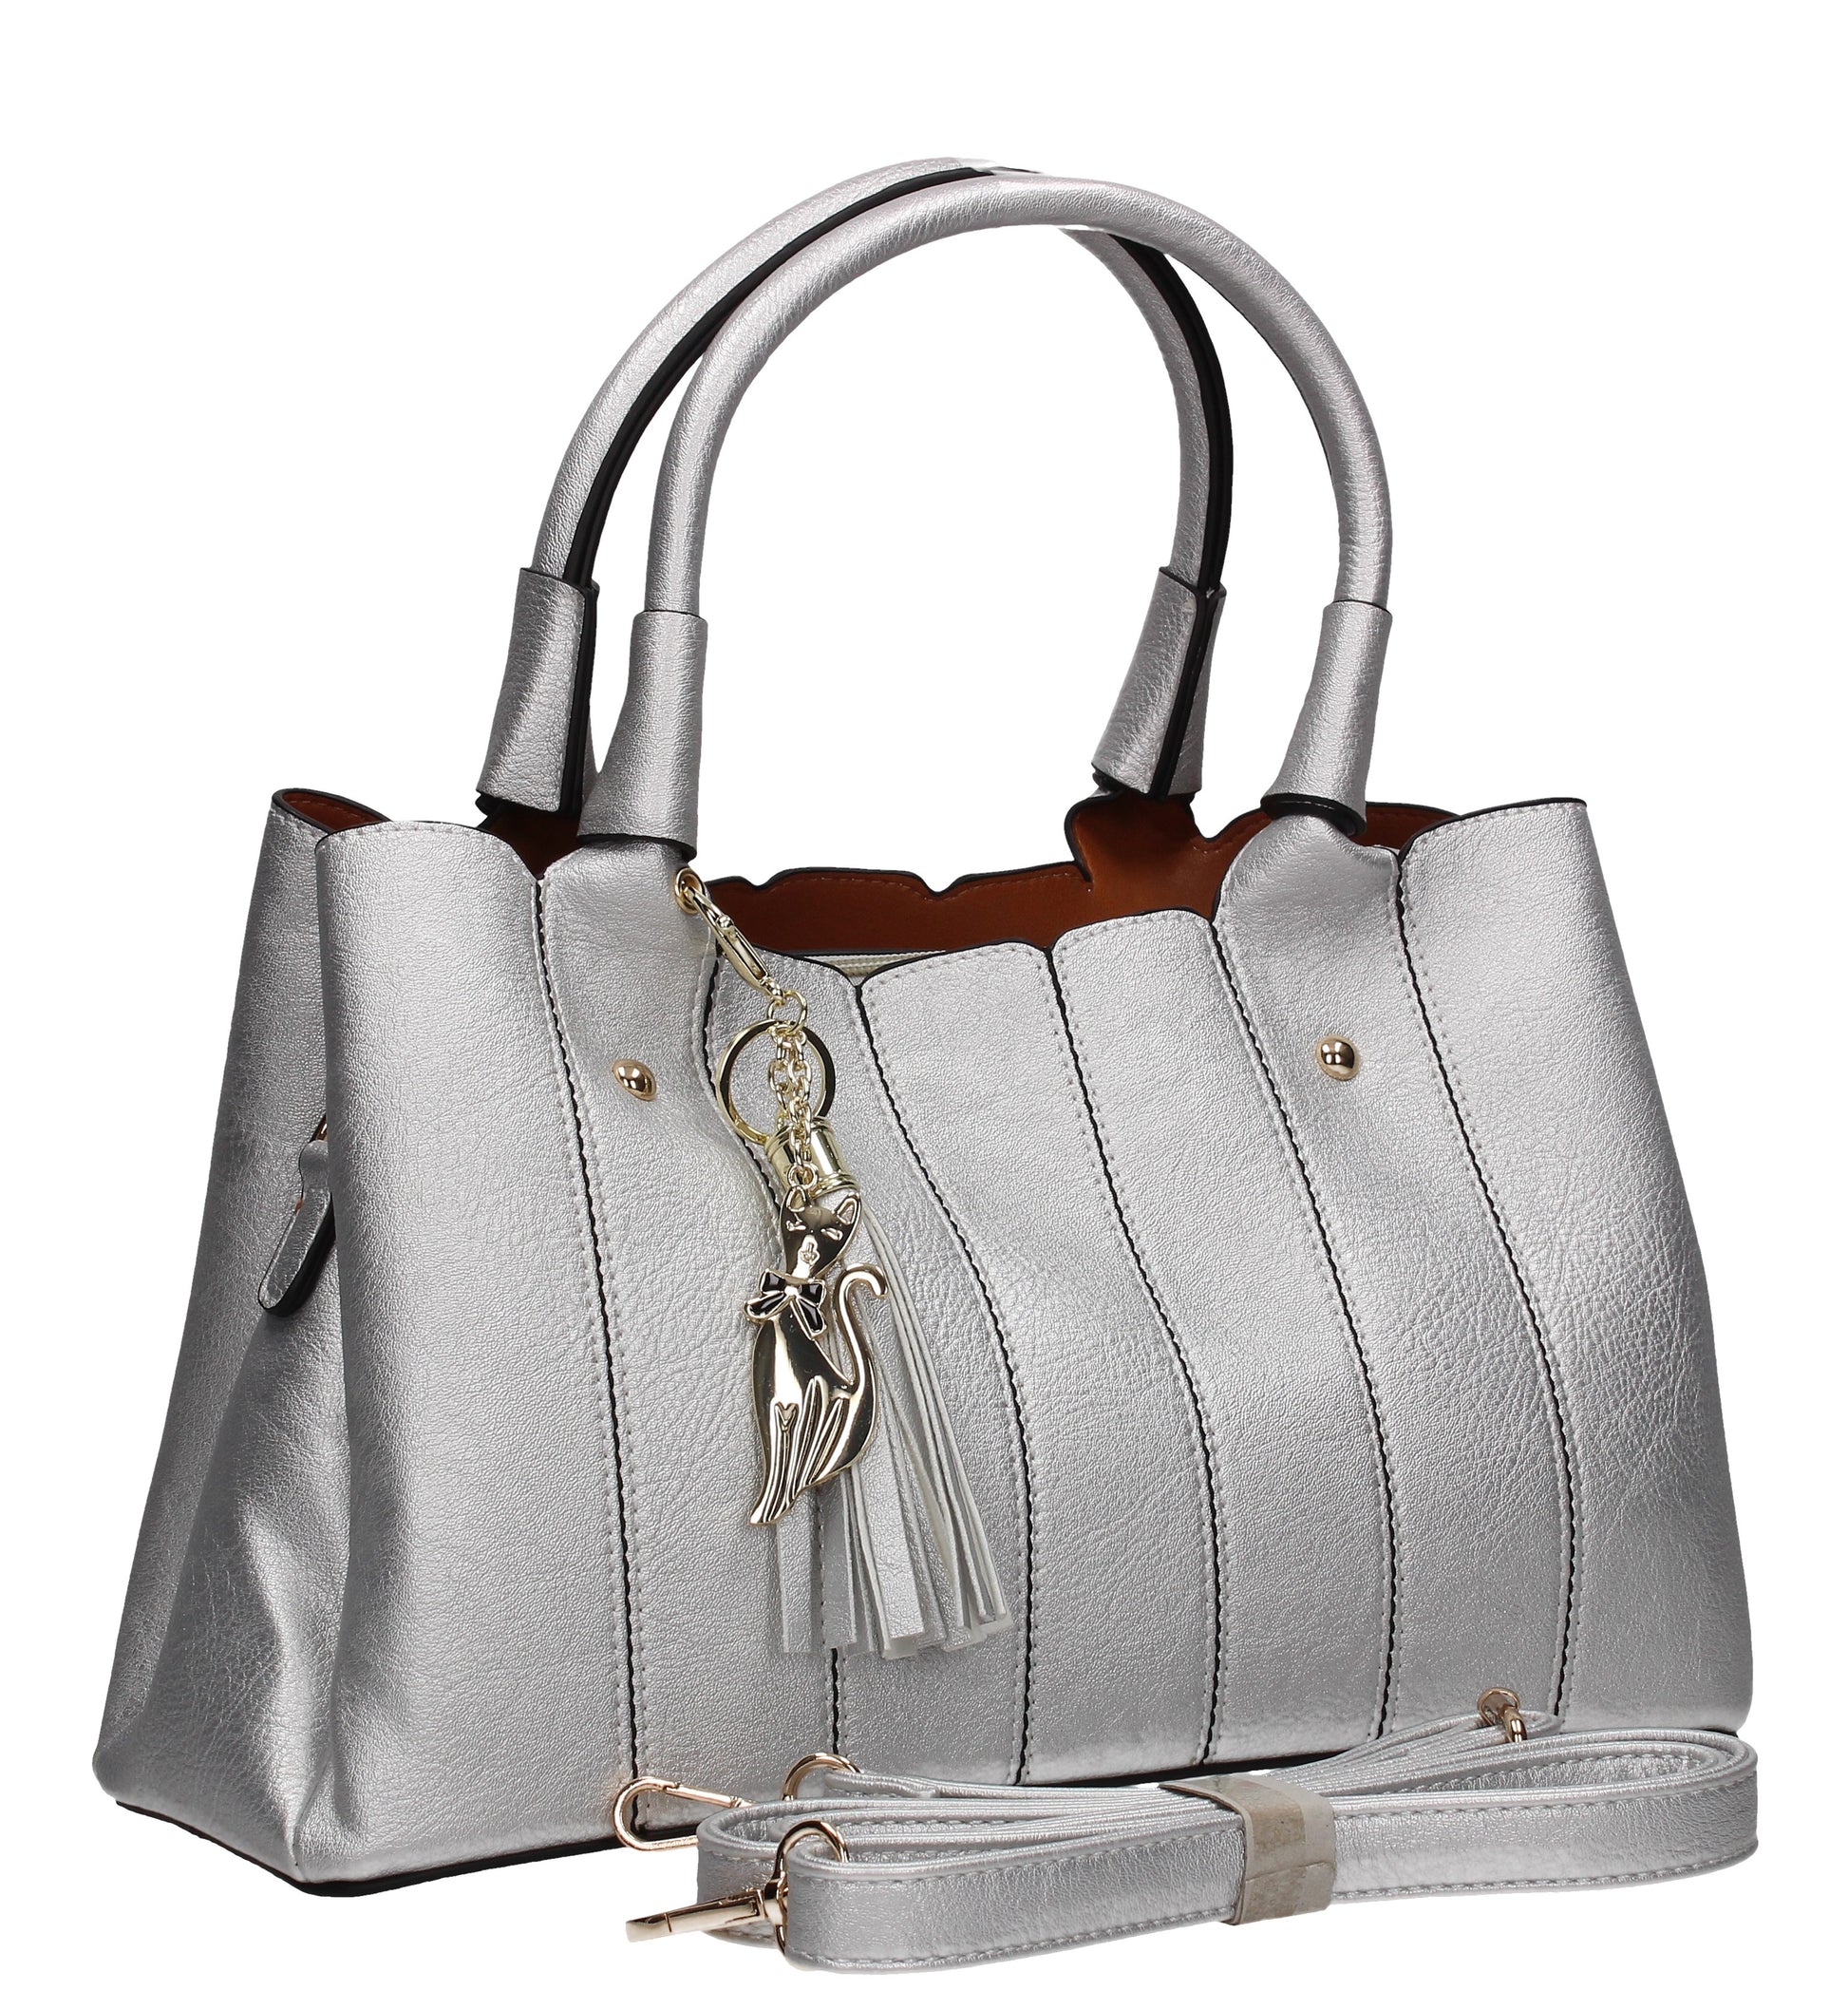 Casey Tassle Handbag SilverBeautiful Cute Animal Faux Leather Clutch Bag Handles Strap Summer School